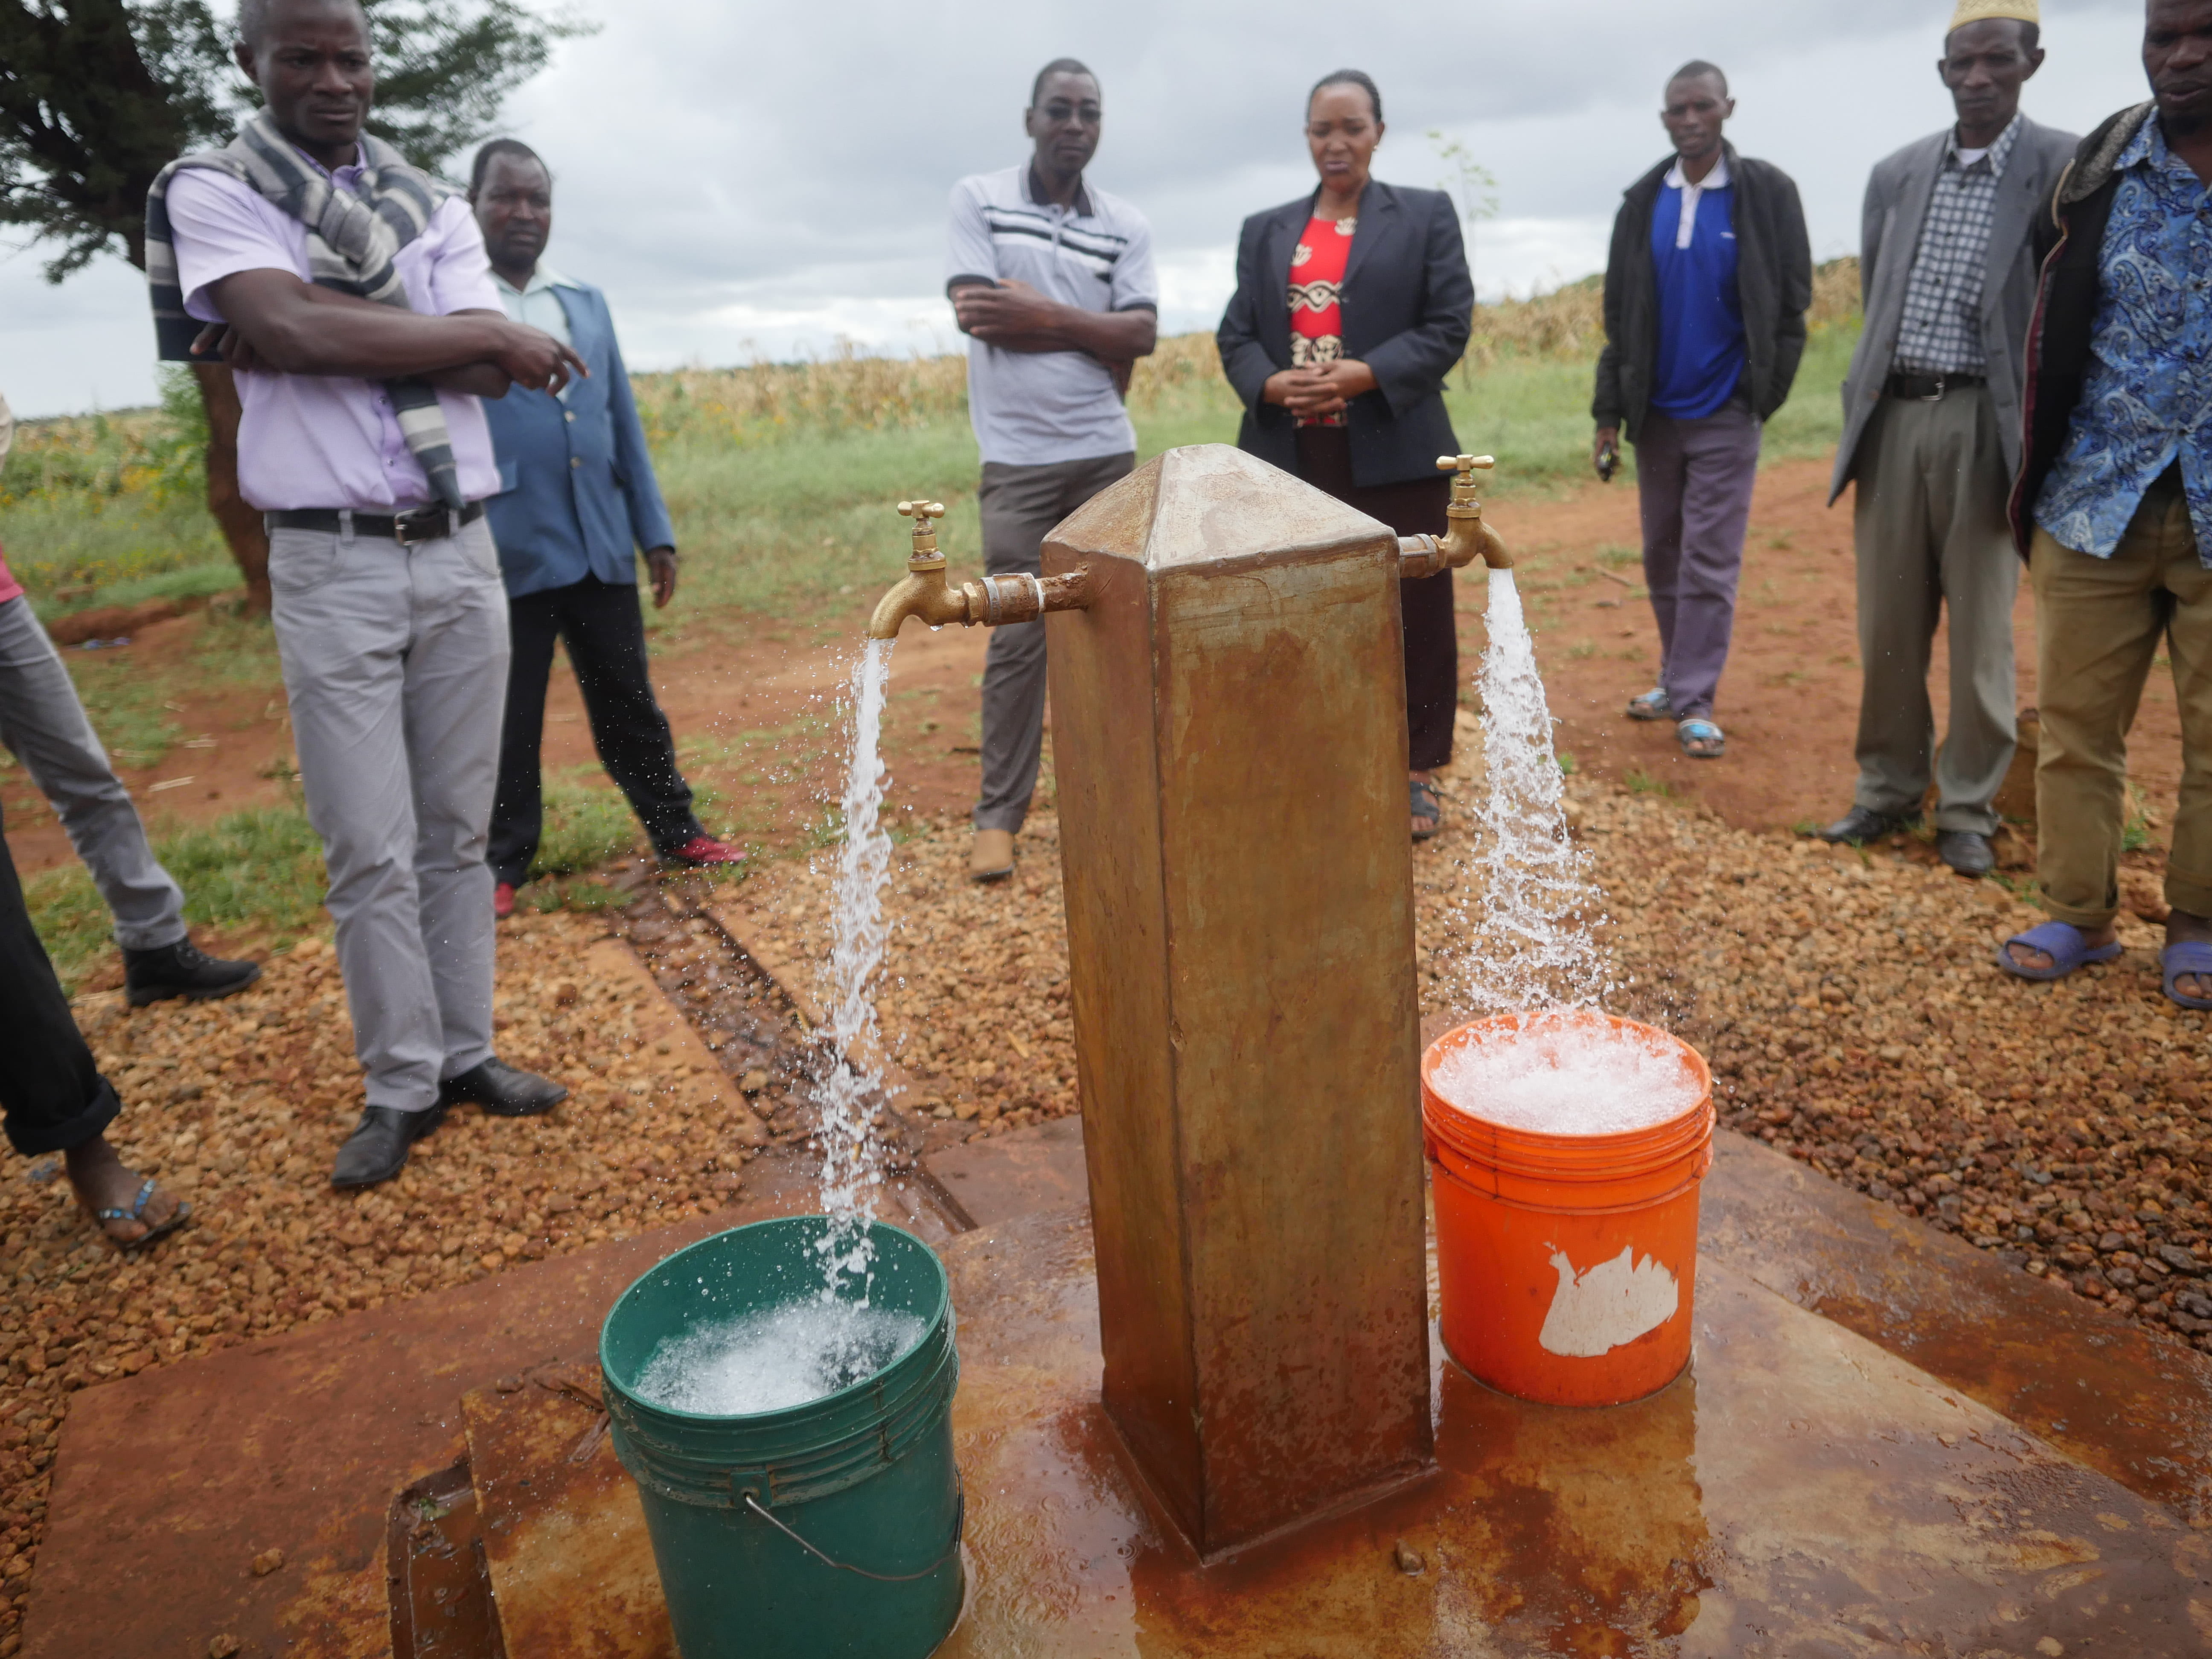 Ohio State brings clean water to 5 million people in Tanzania - OSU - The Lantern